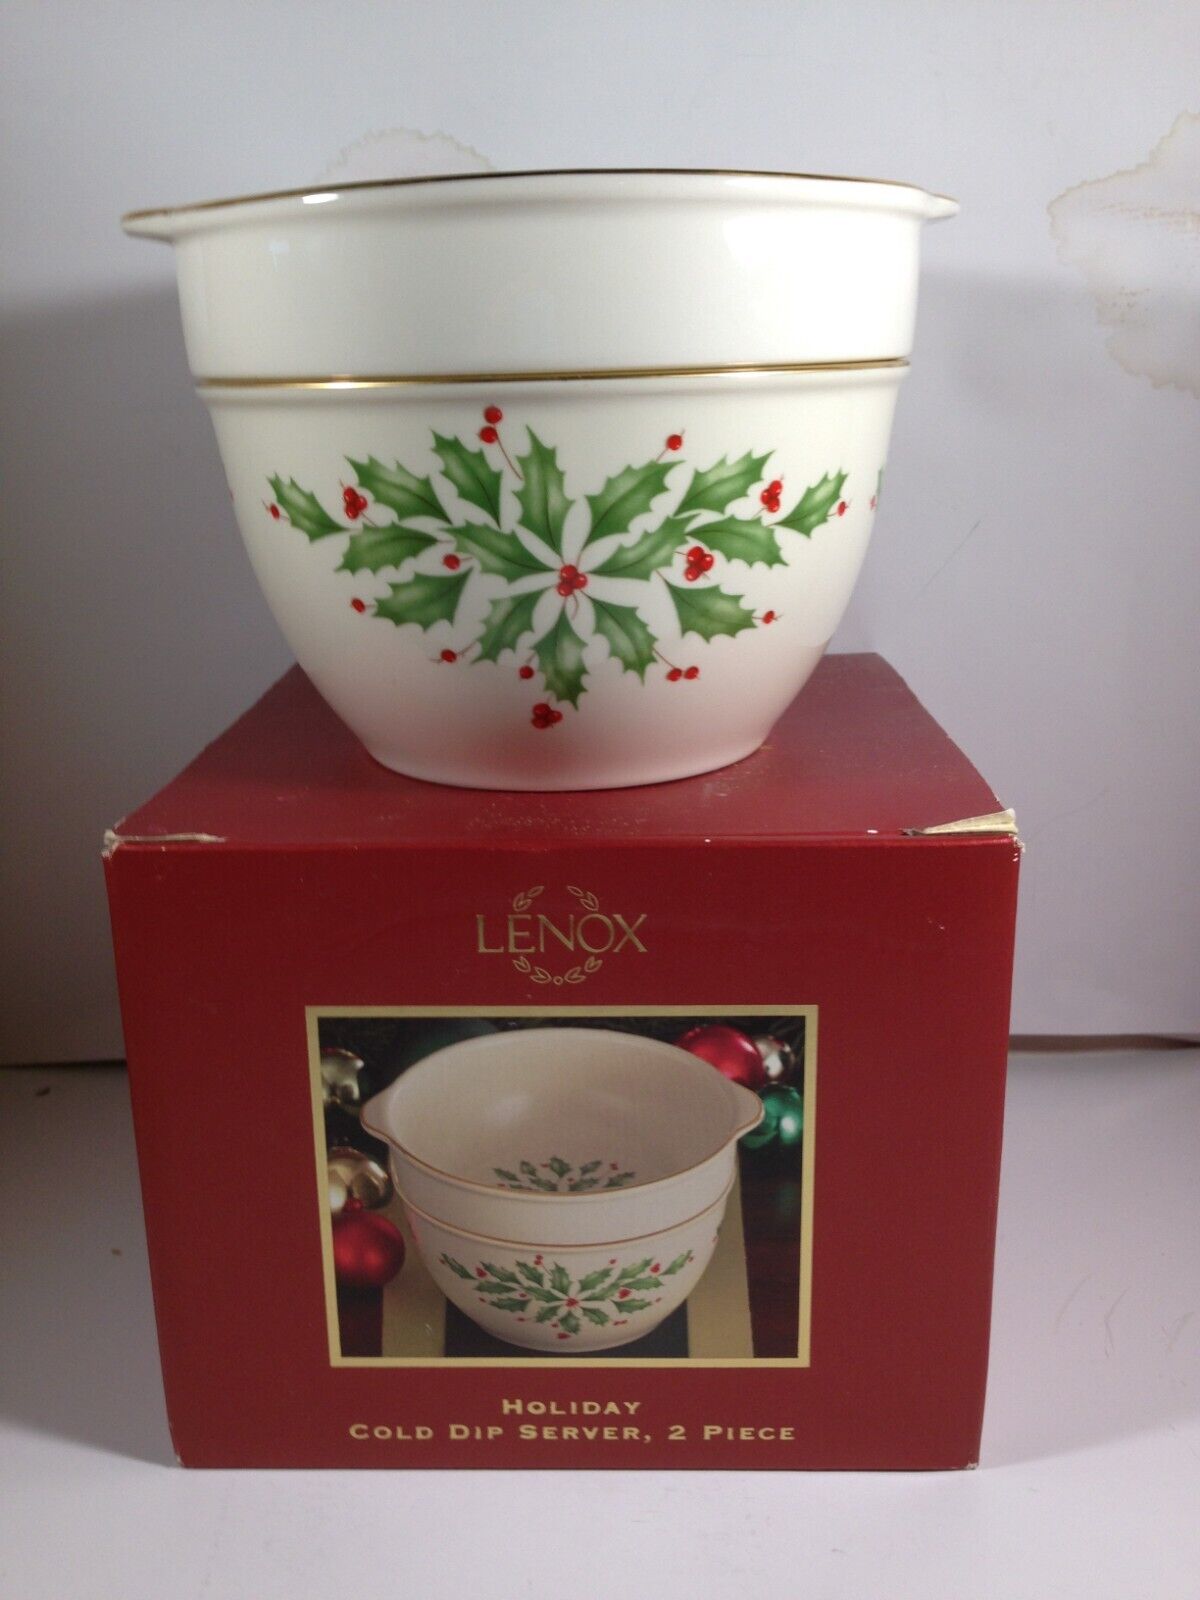 Lenox Holiday Cold Dip Server Christmas Porcelain